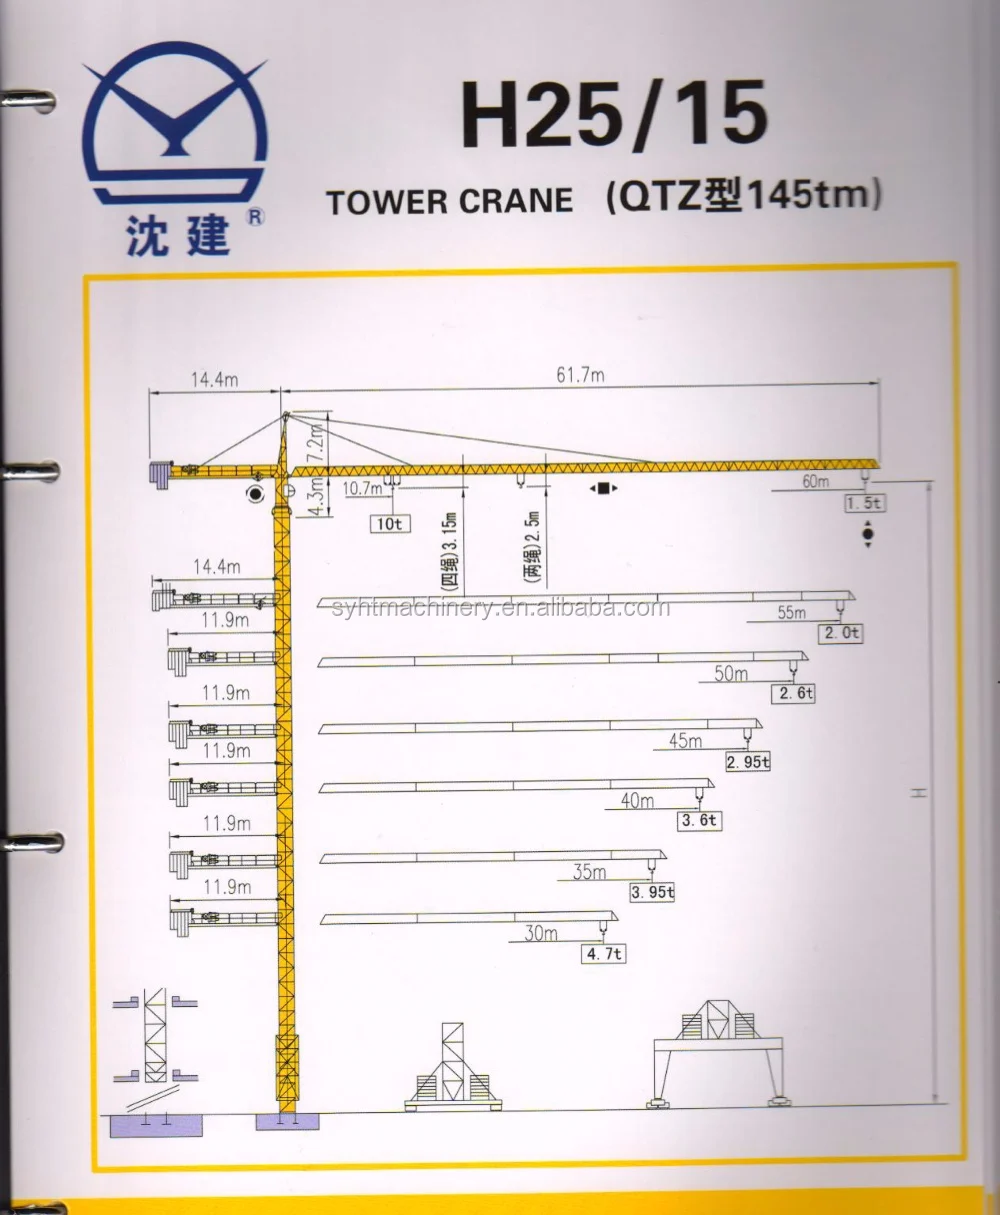 Source QTZ145tm tower crane, H25/15 topkit tower crane on m.alibaba.com